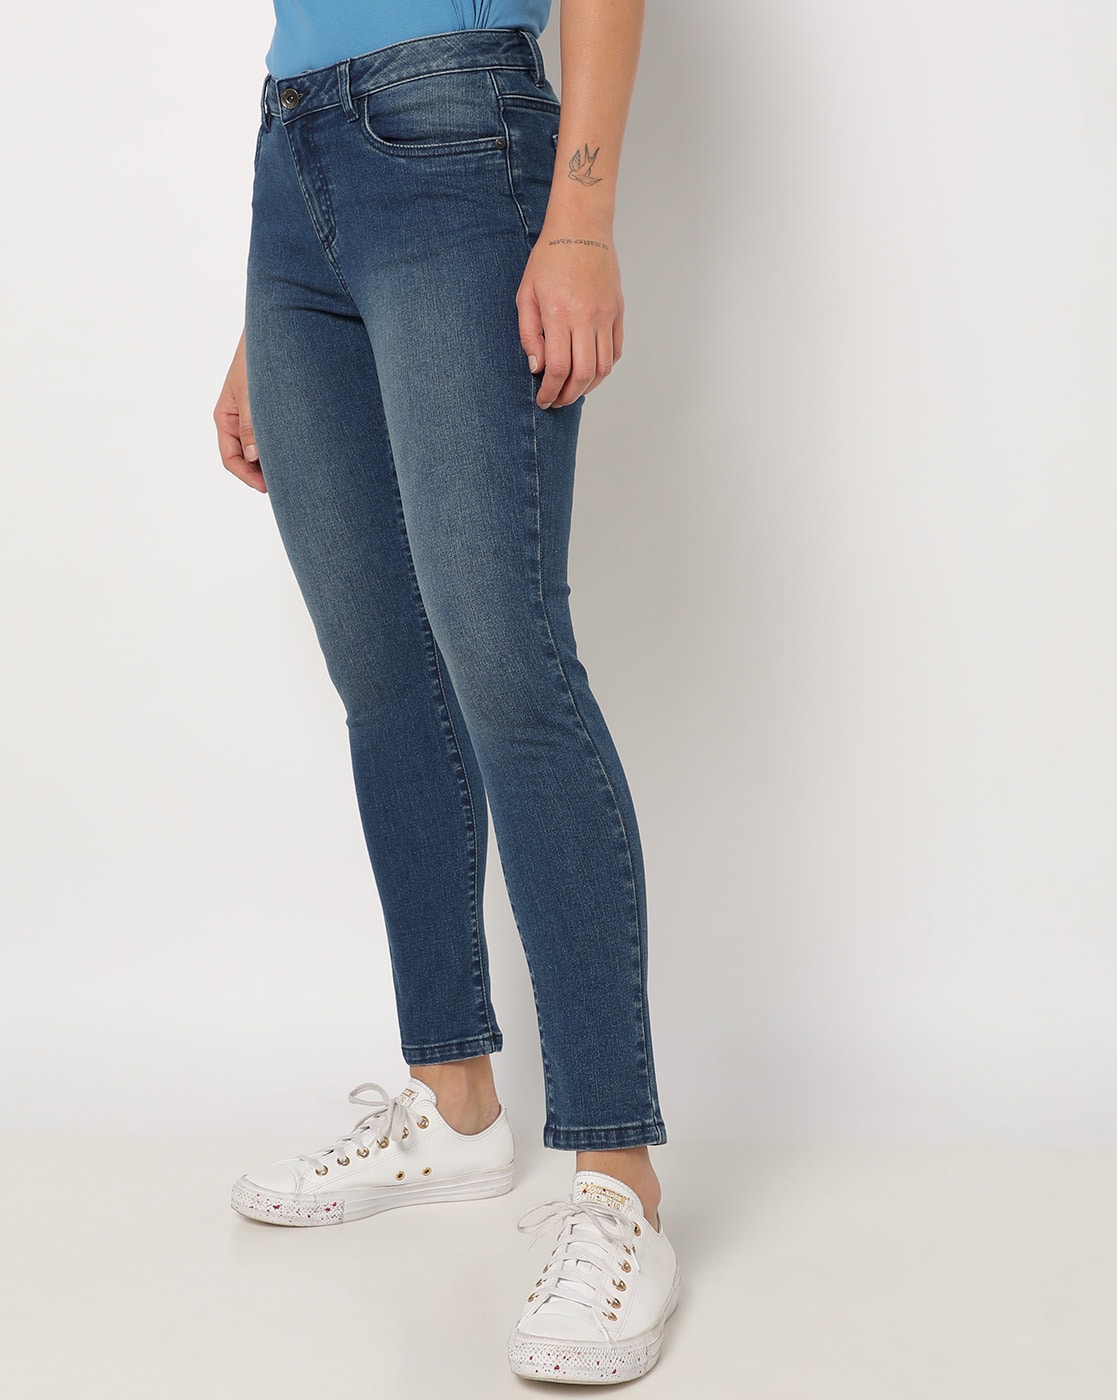 Women's Stylish Denim Dark blue Jeans-atpcosmetics.com.vn